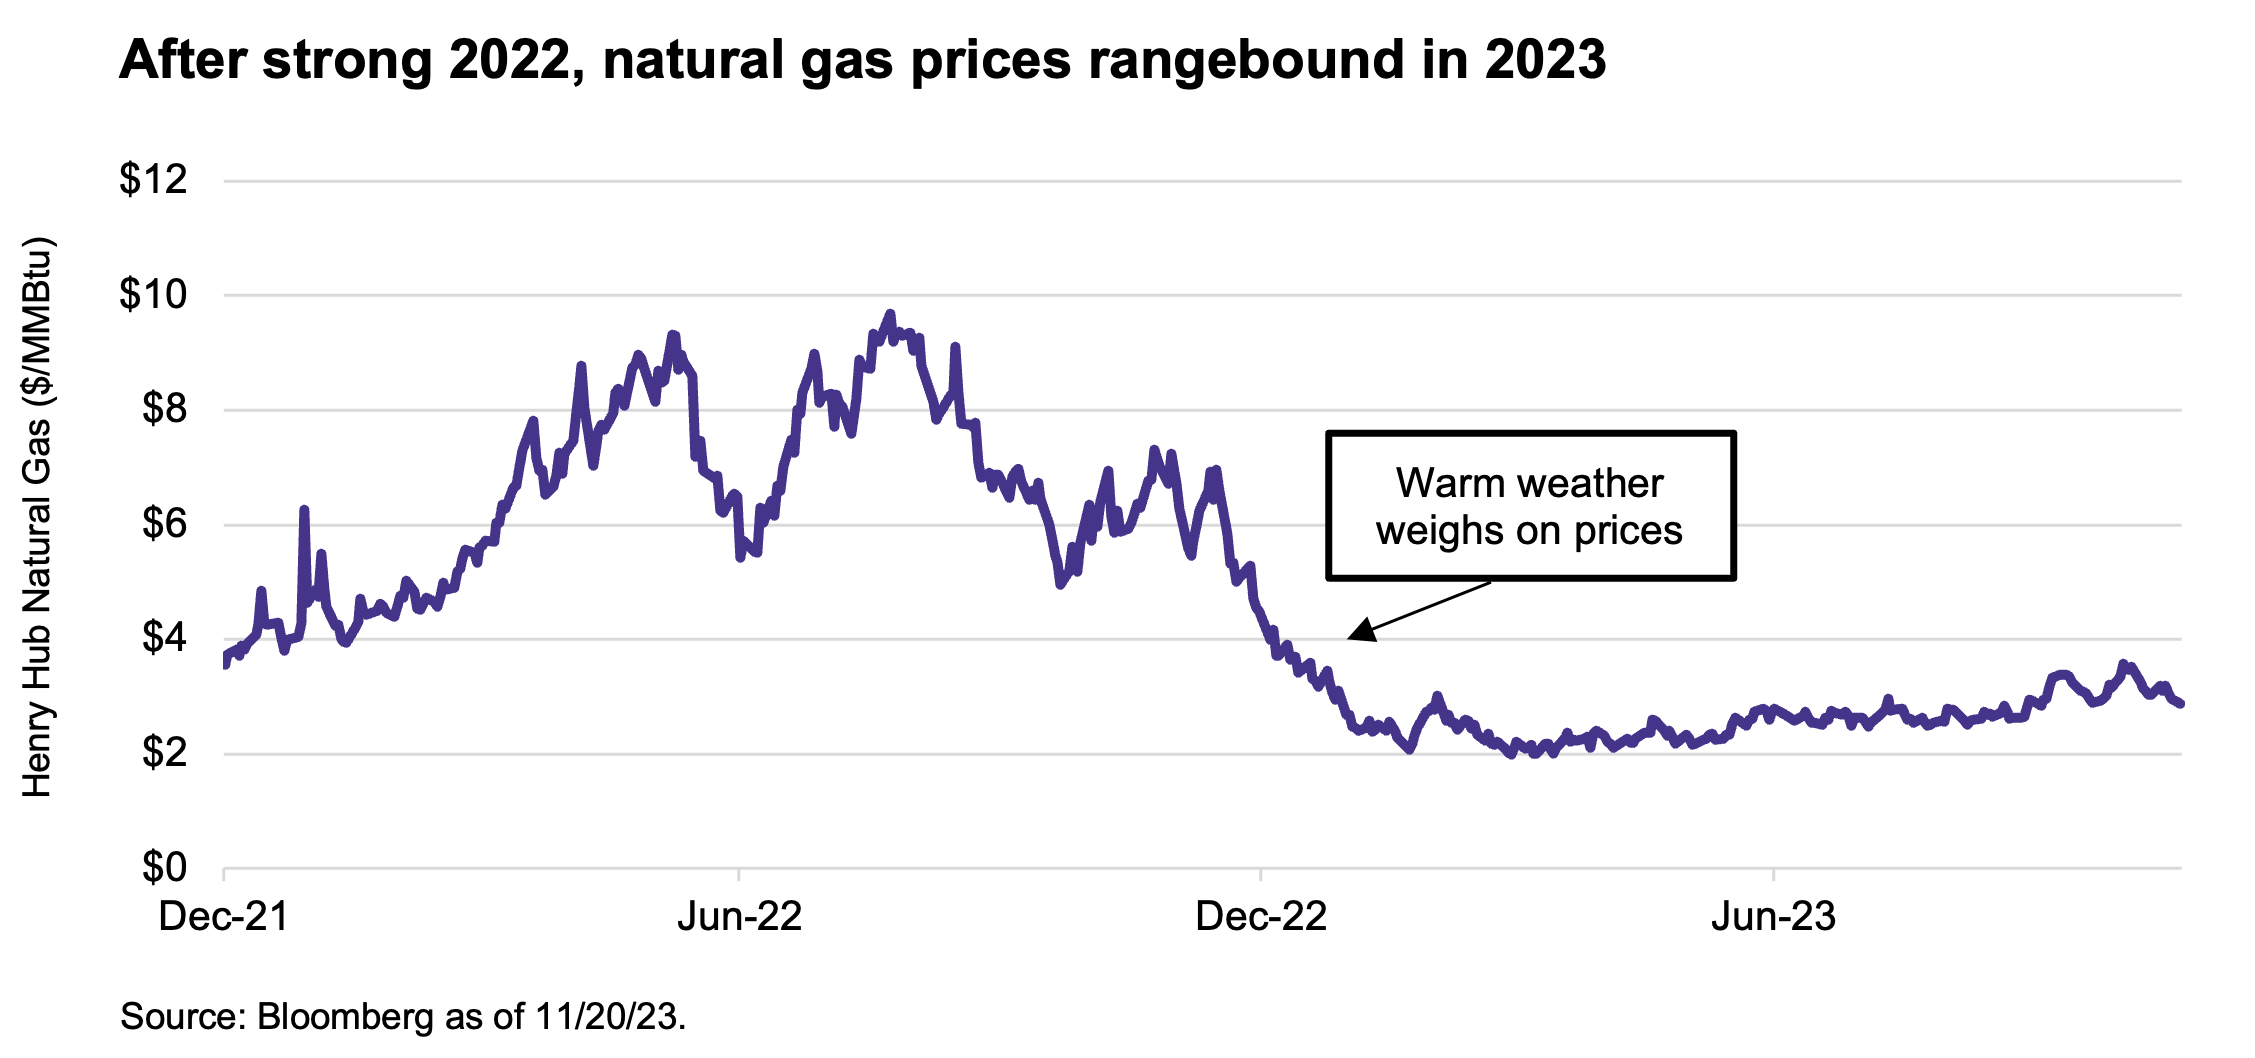 After strong 2022 natgas prices rangebound in 2023